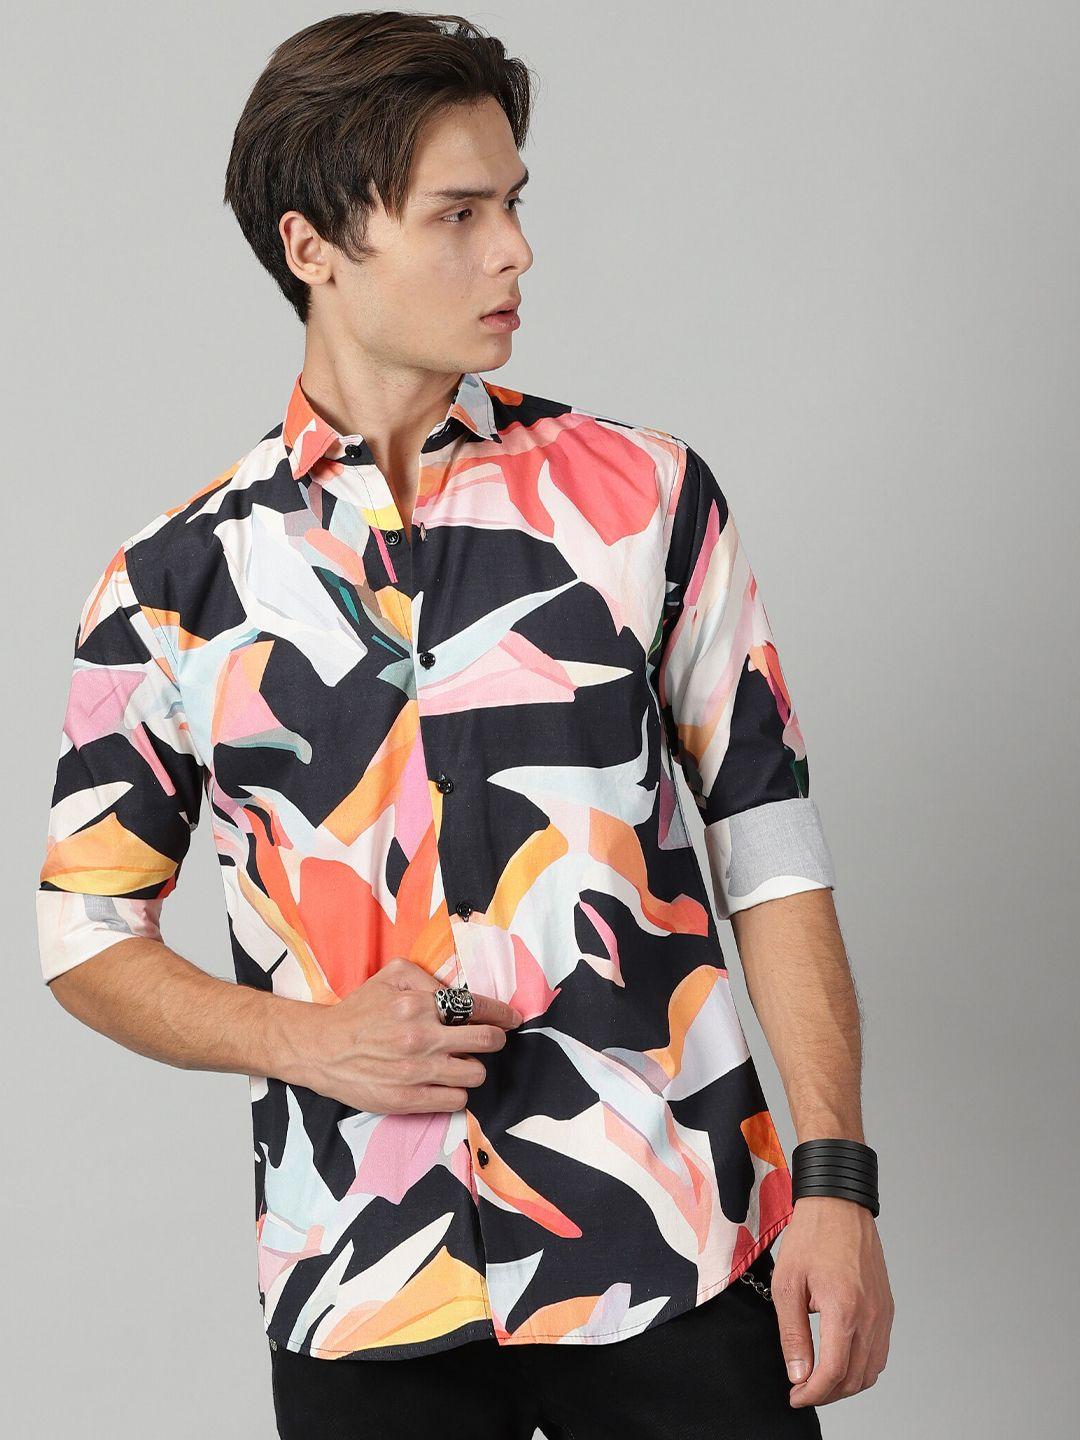 lakaala premium abstract printed opaque pure cotton casual shirt